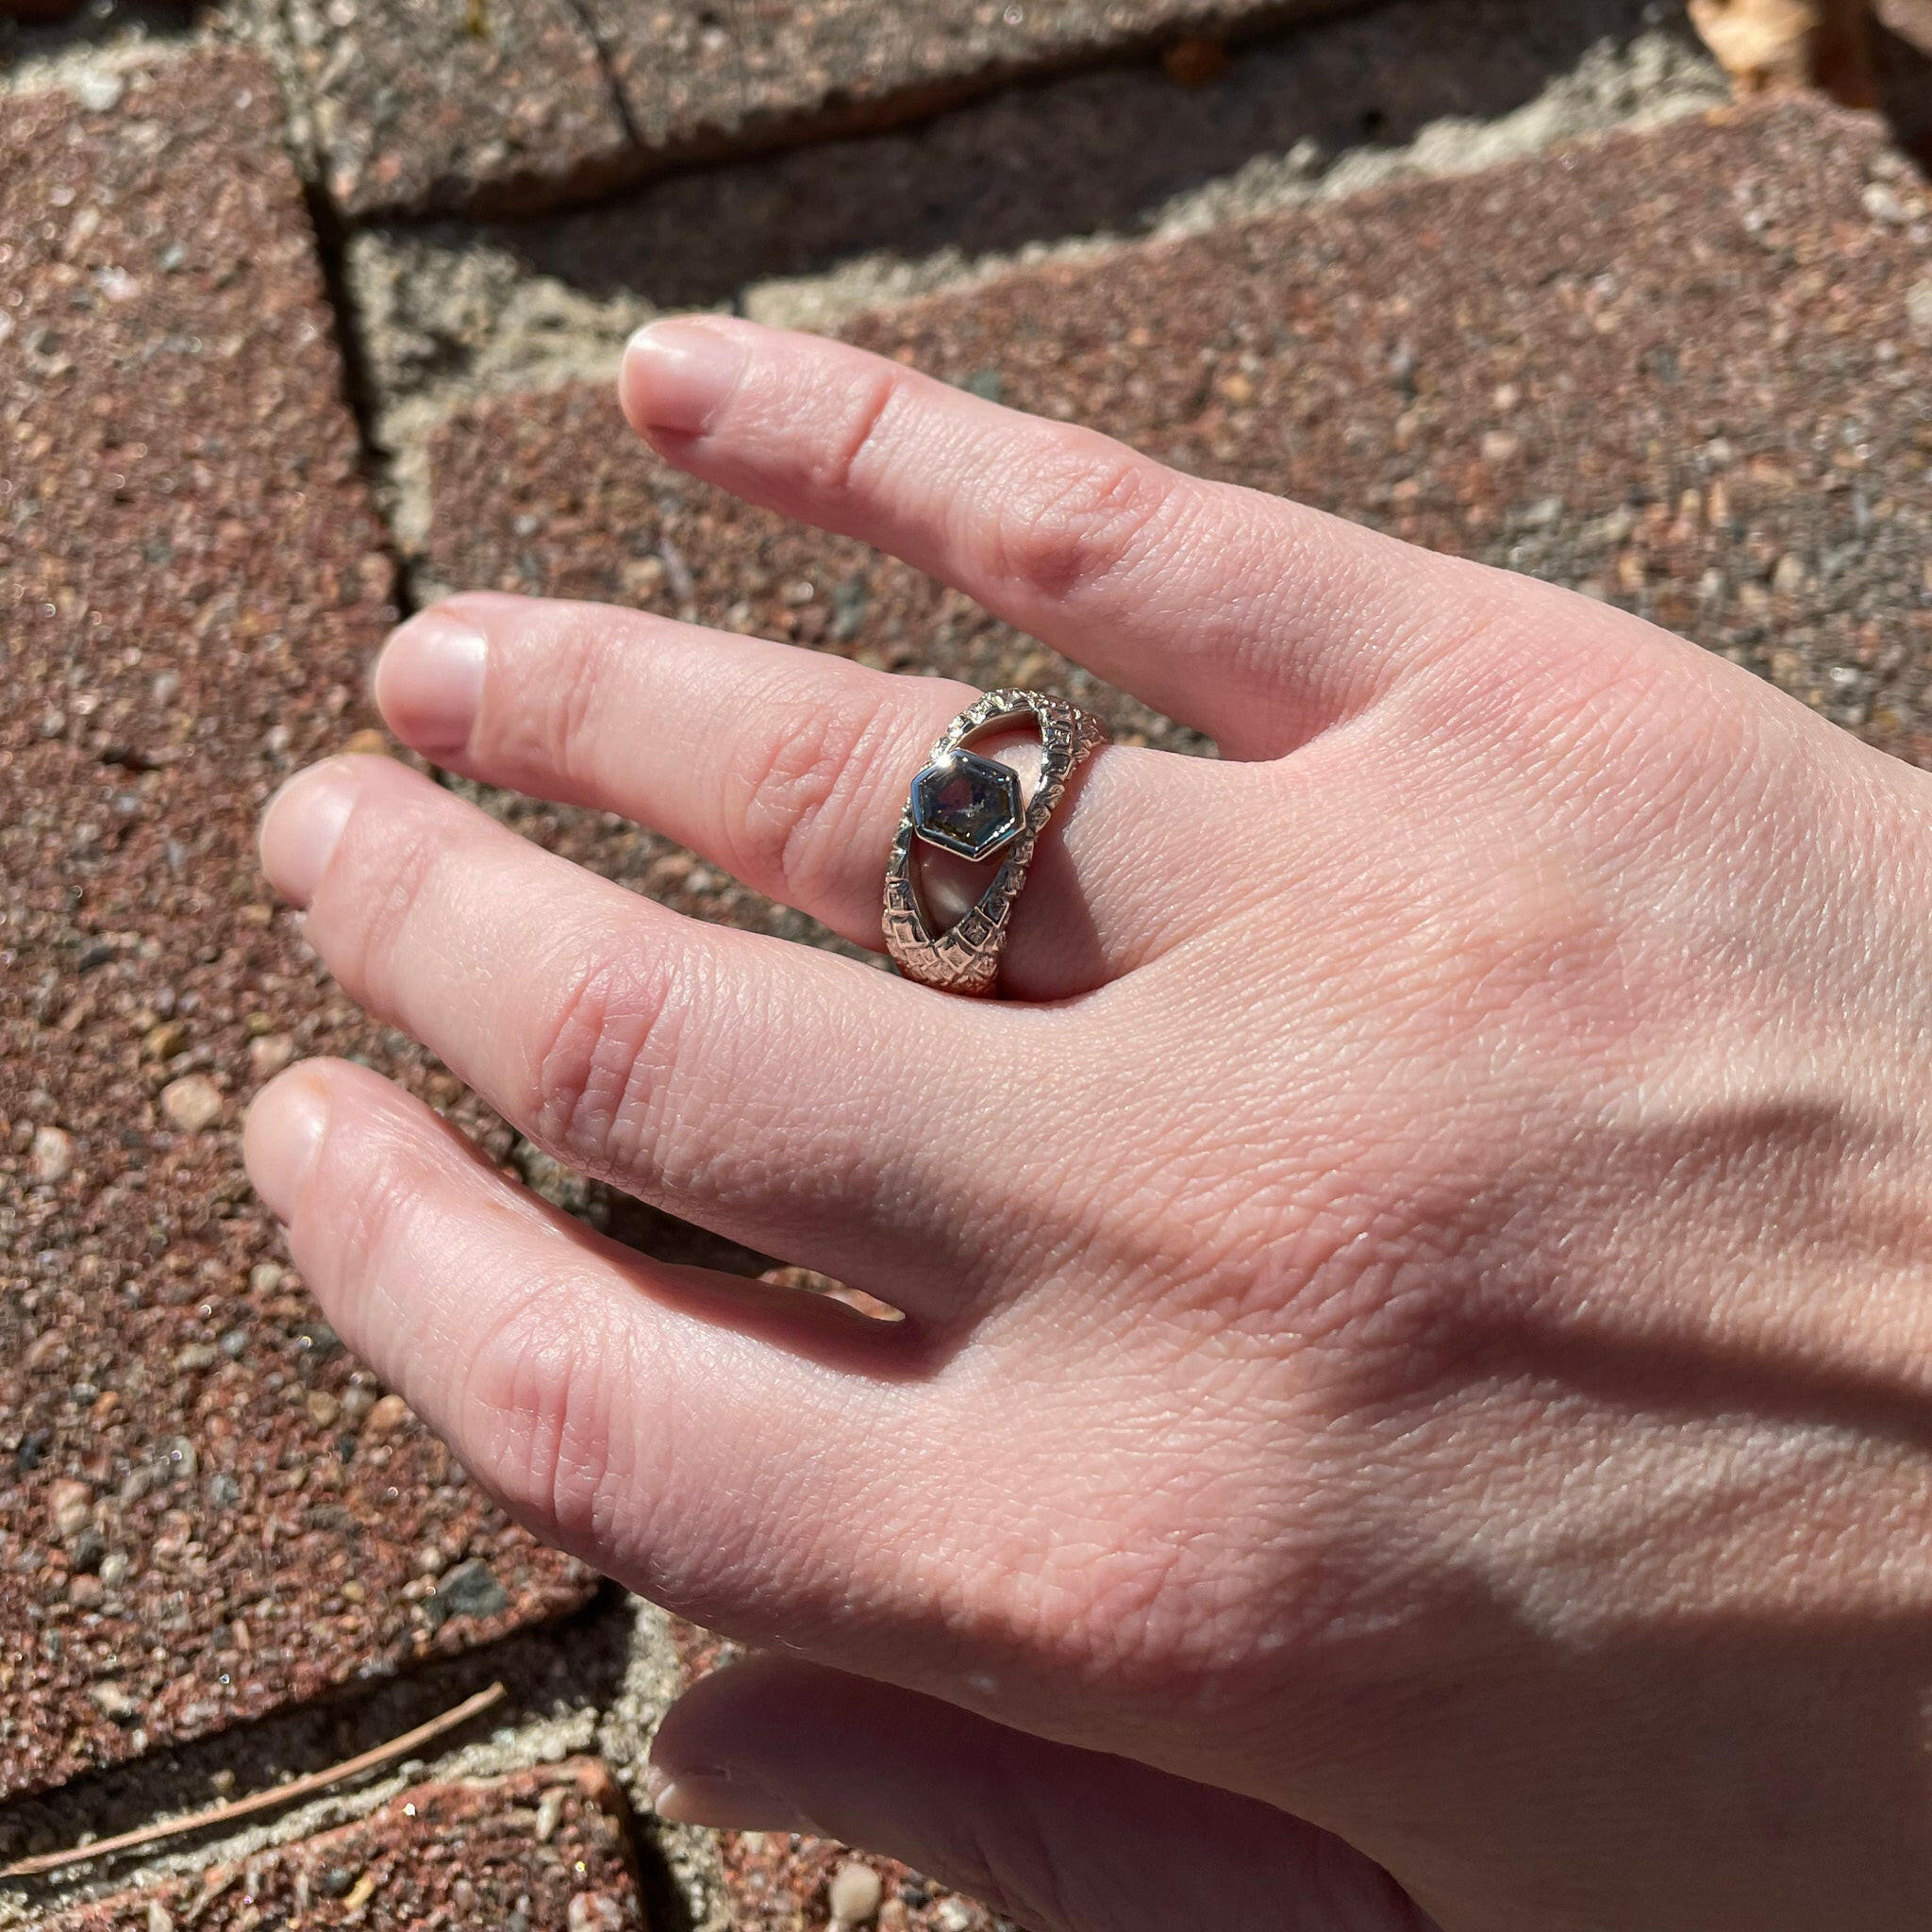 unique engagement ring